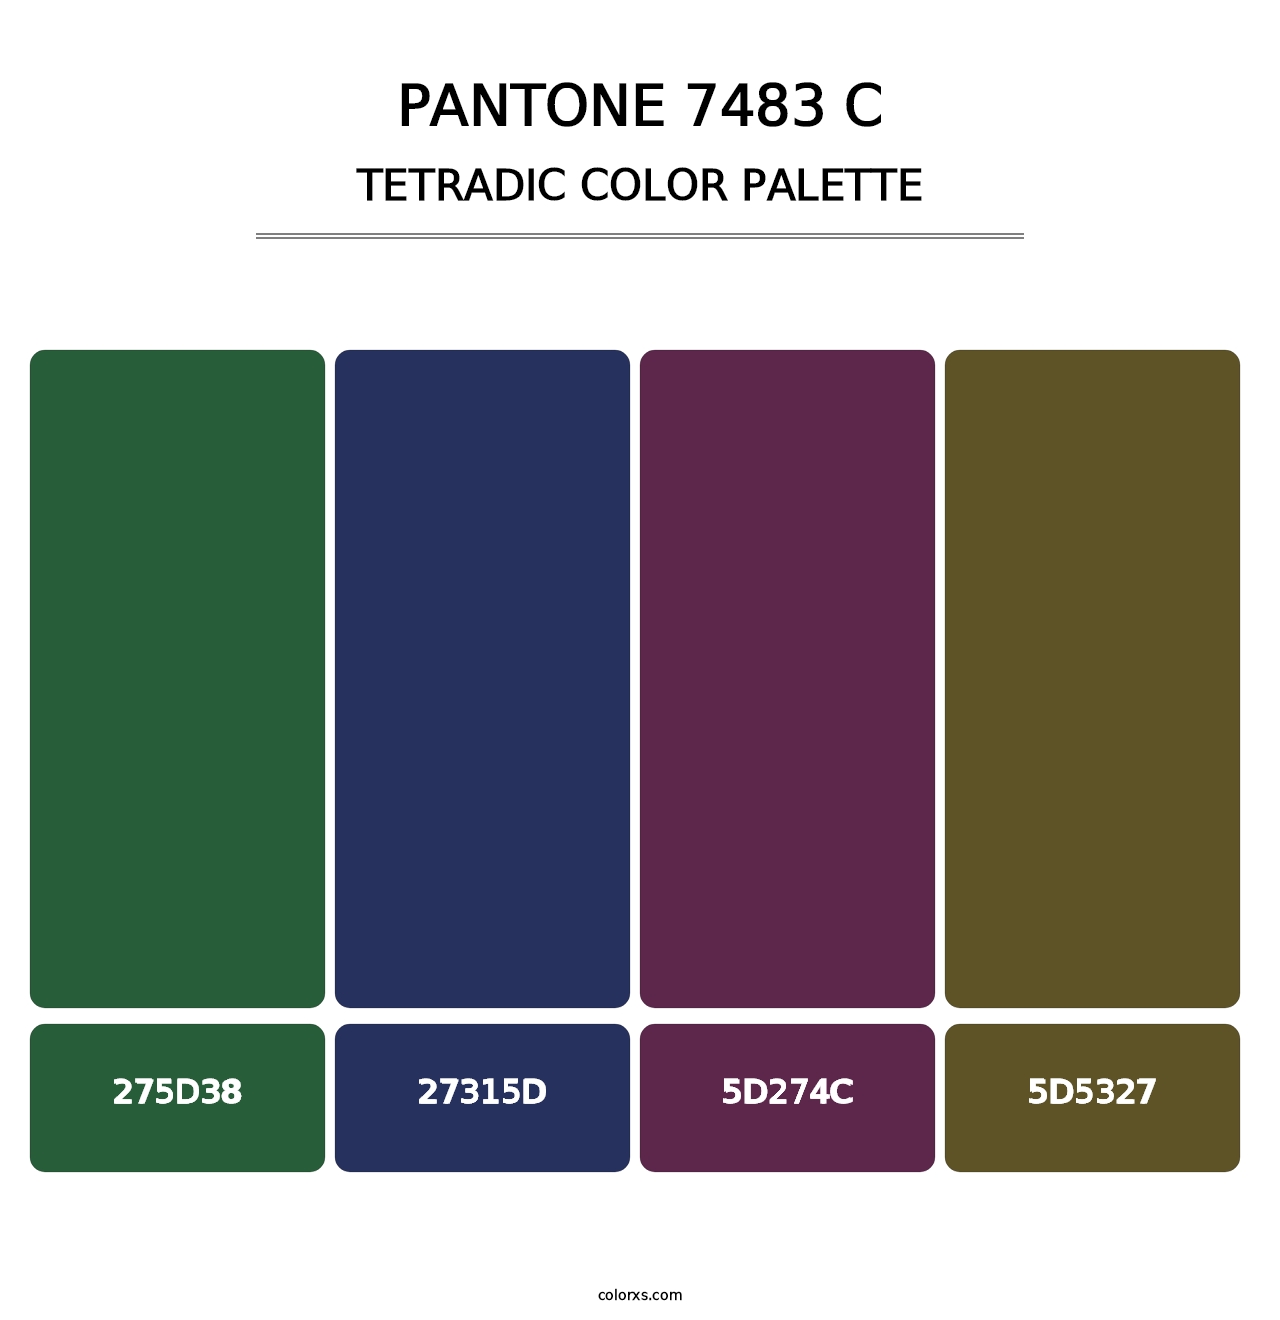 PANTONE 7483 C - Tetradic Color Palette